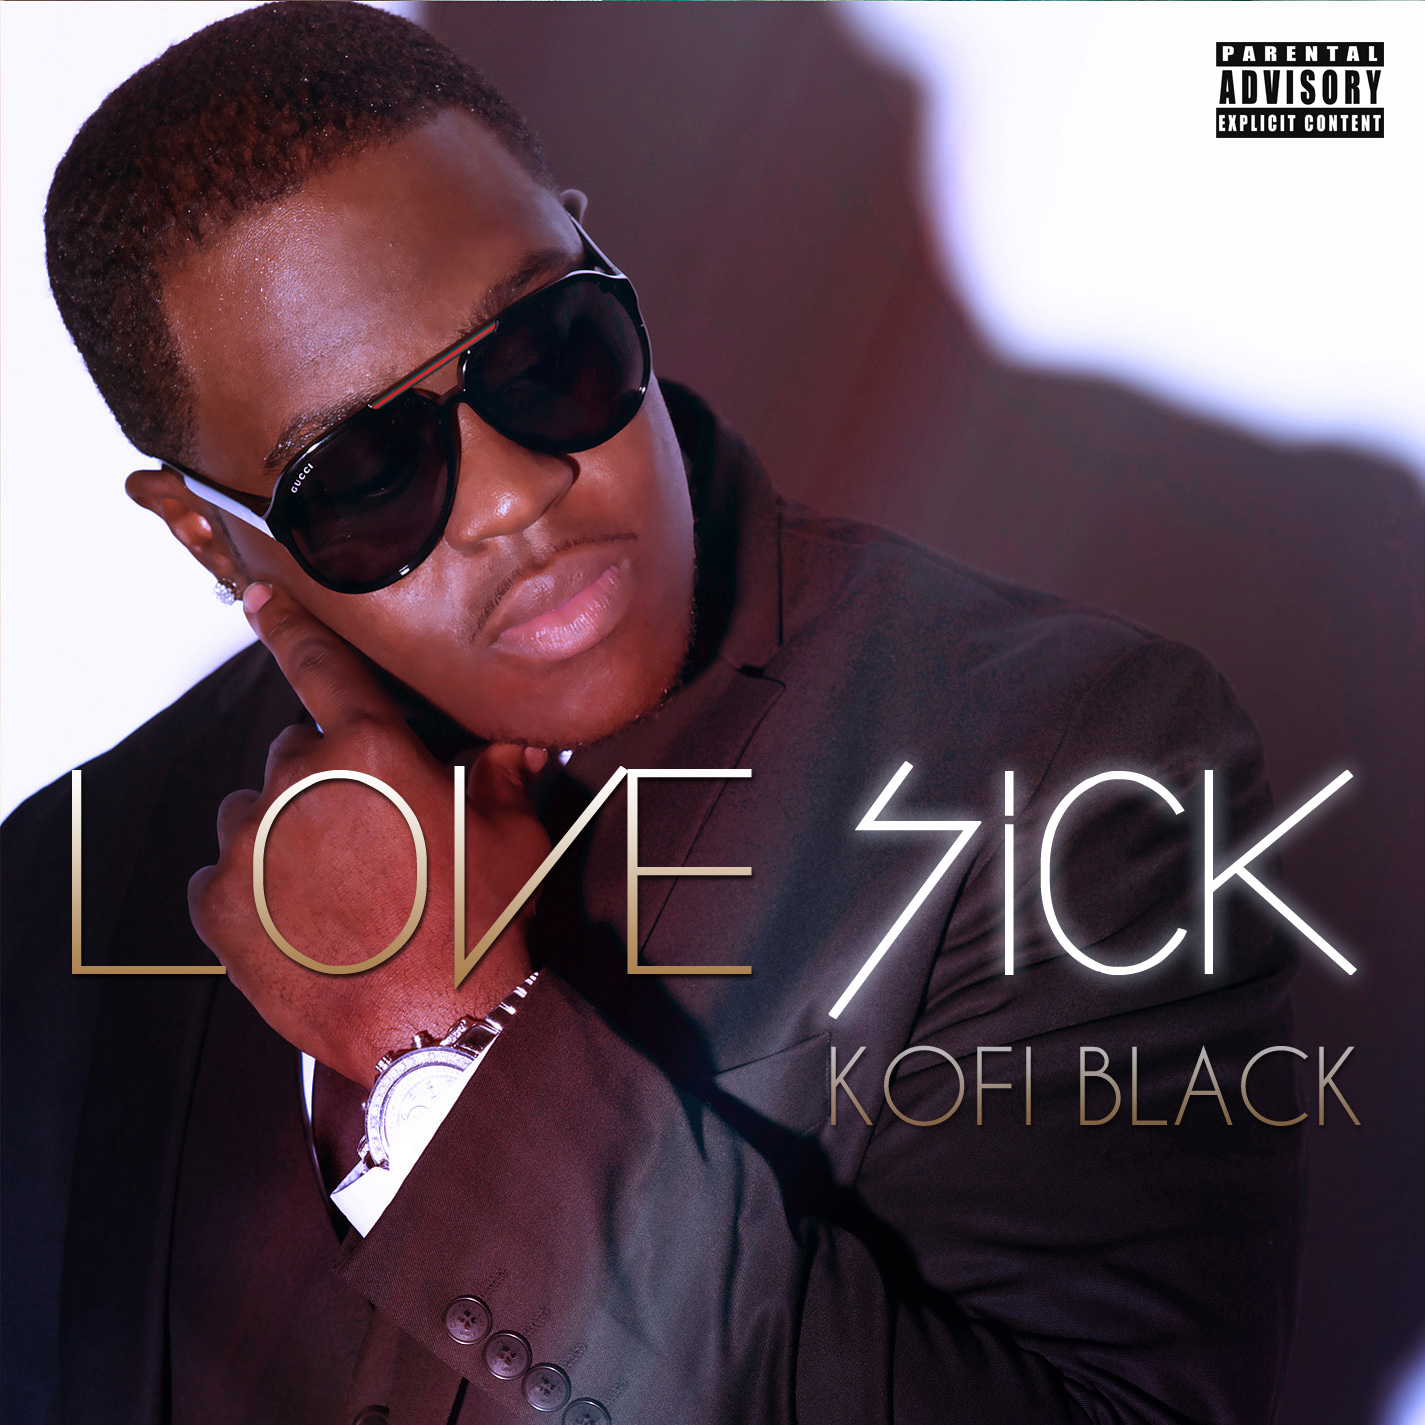 Kofi Black "Love Your Crazy" featuring Raekwon